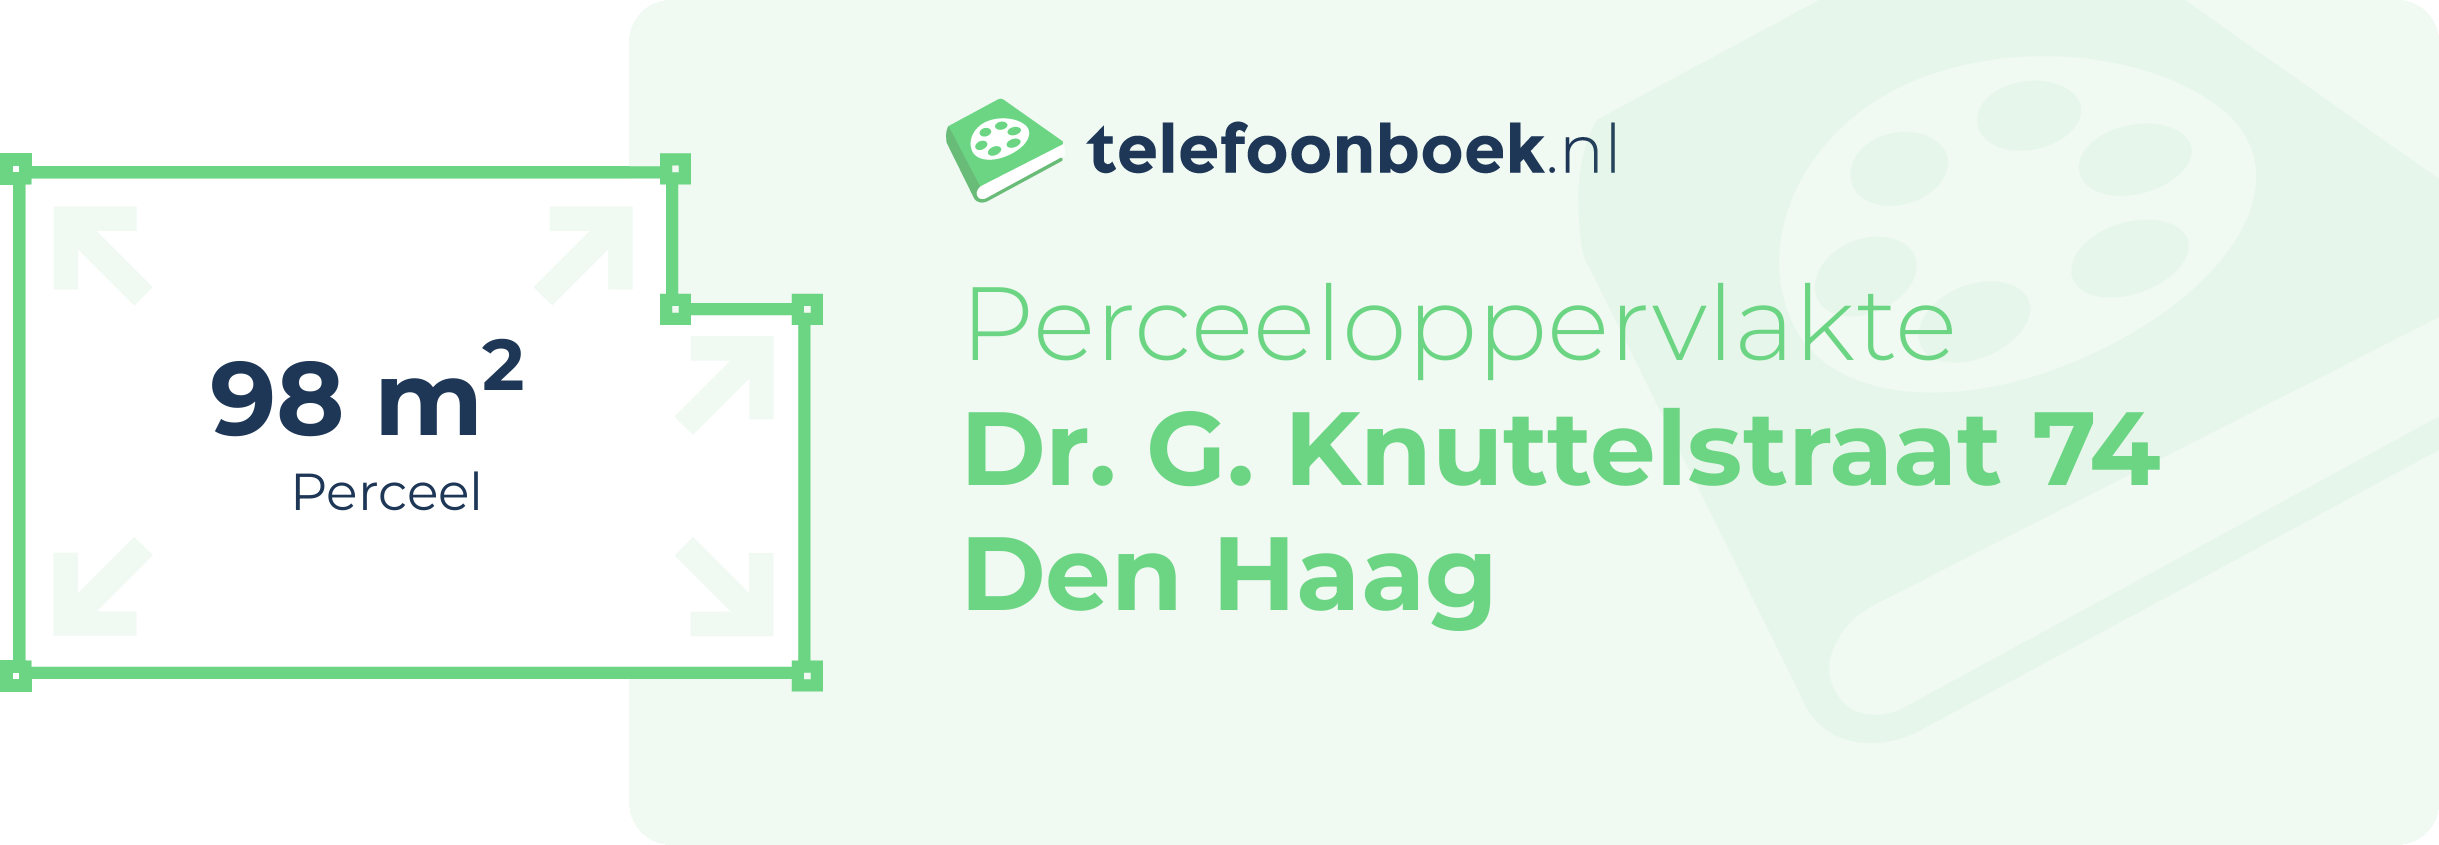 Perceeloppervlakte Dr. G. Knuttelstraat 74 Den Haag